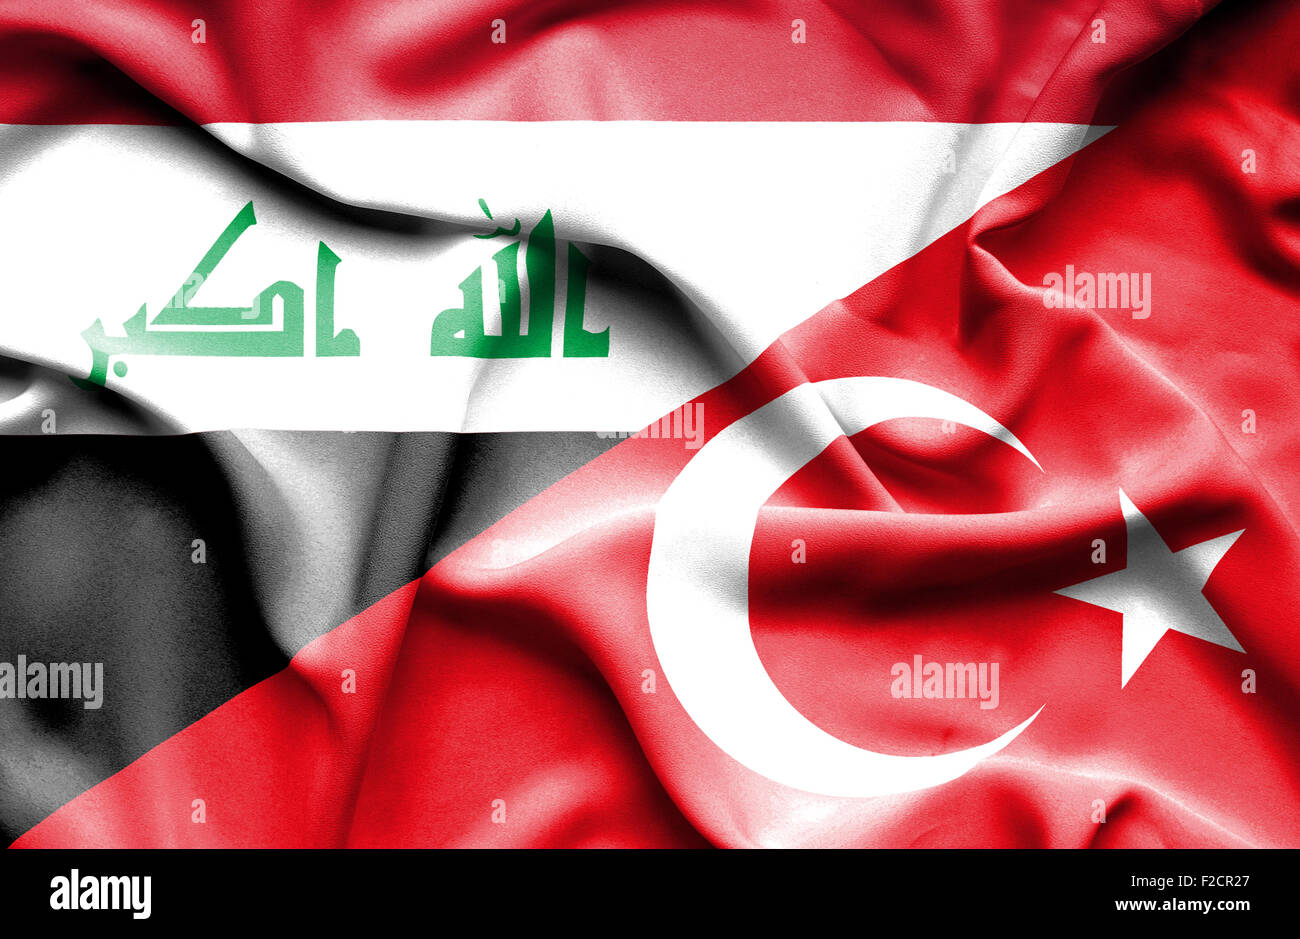 https://c8.alamy.com/comp/F2CR27/waving-flag-of-turkey-and-iraq-F2CR27.jpg